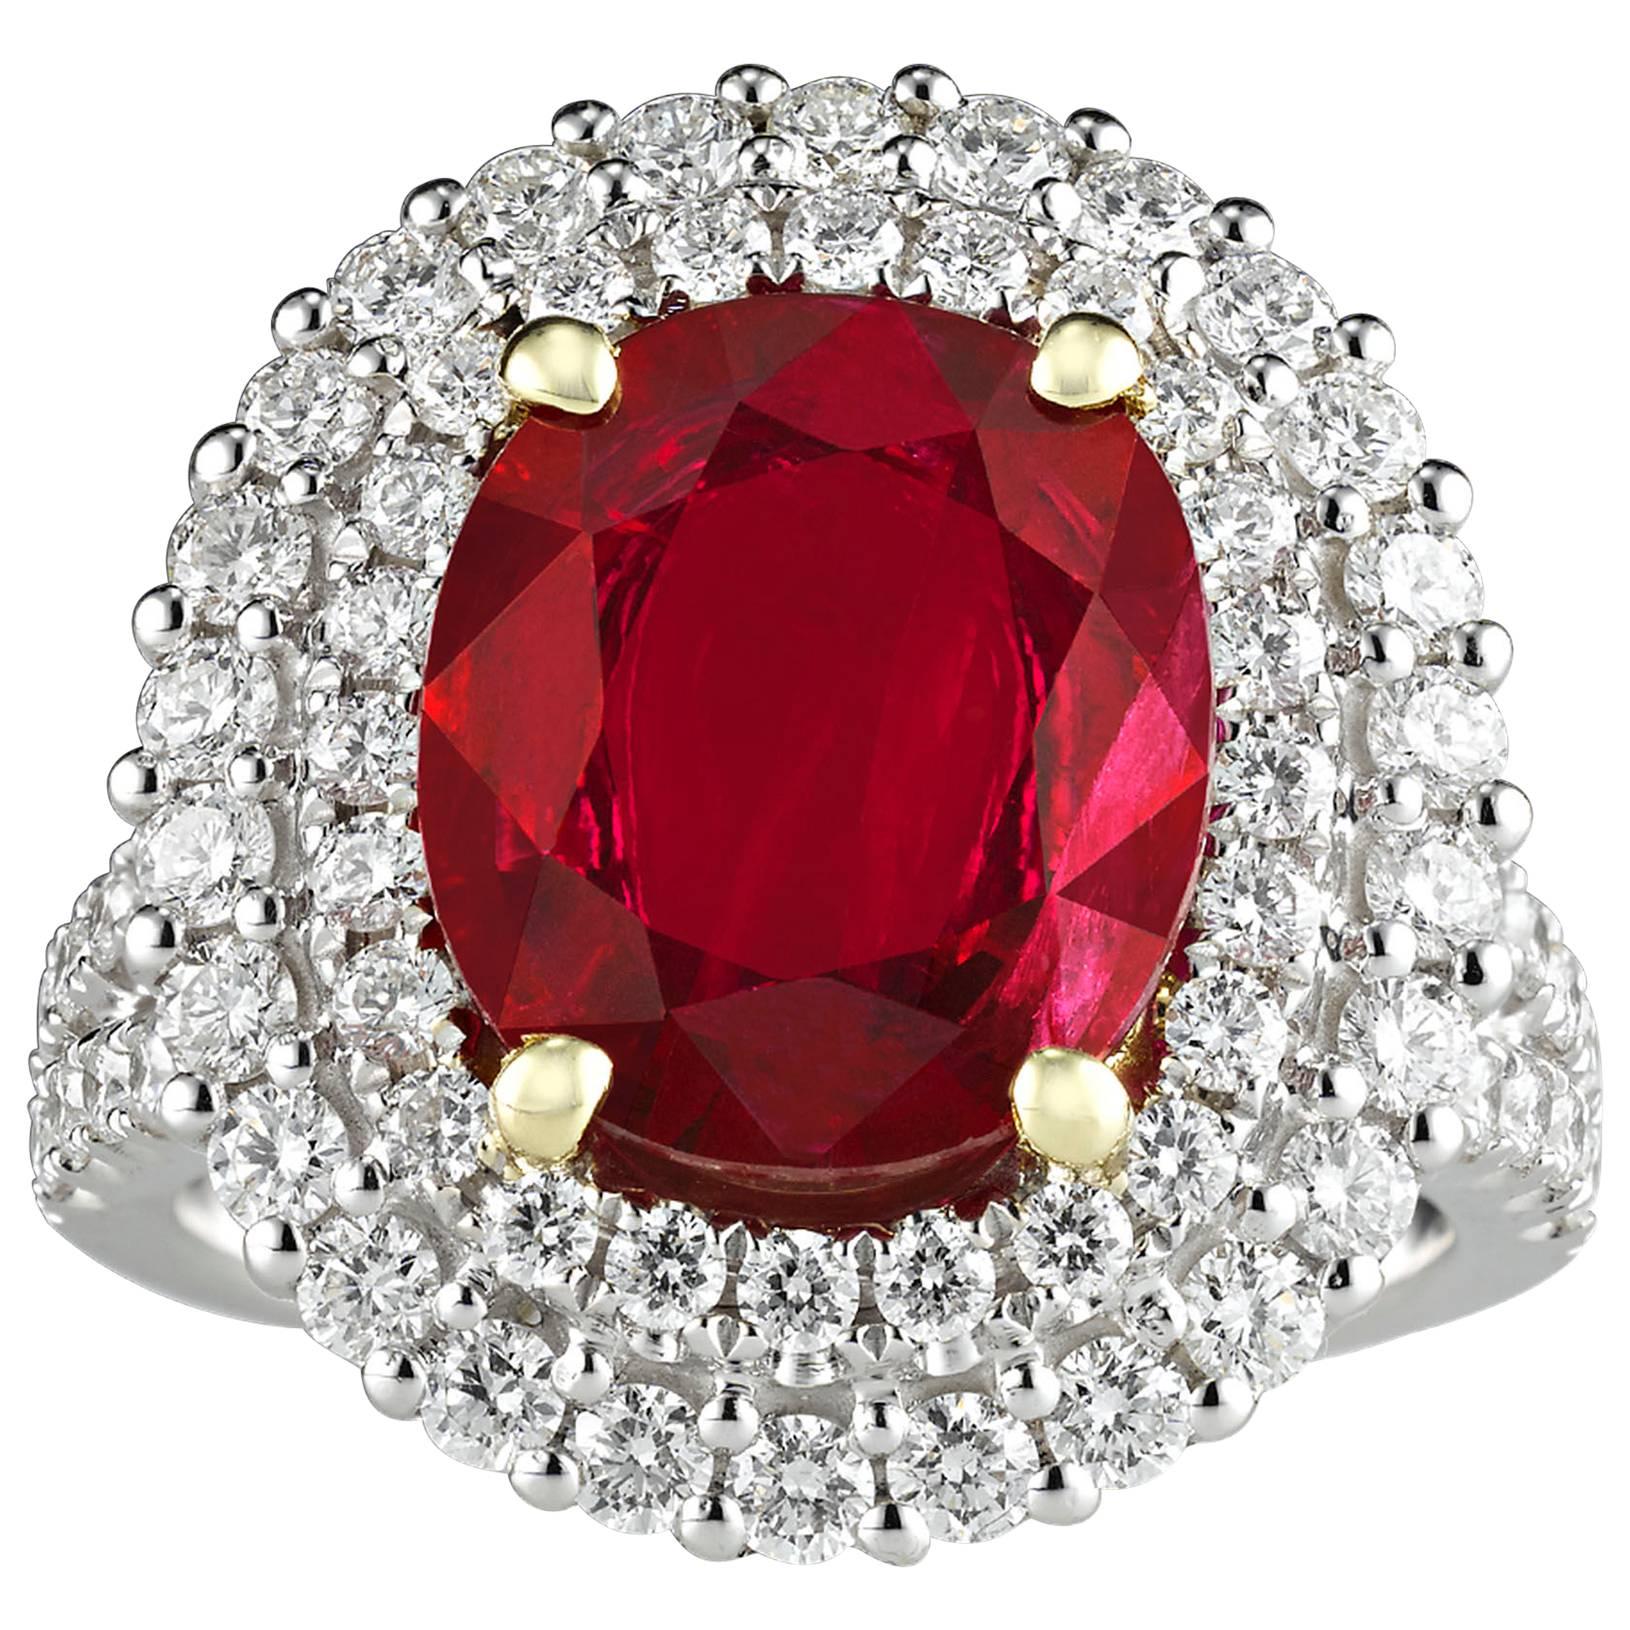 3.95 Carat Burma Ruby Diamond Ring 